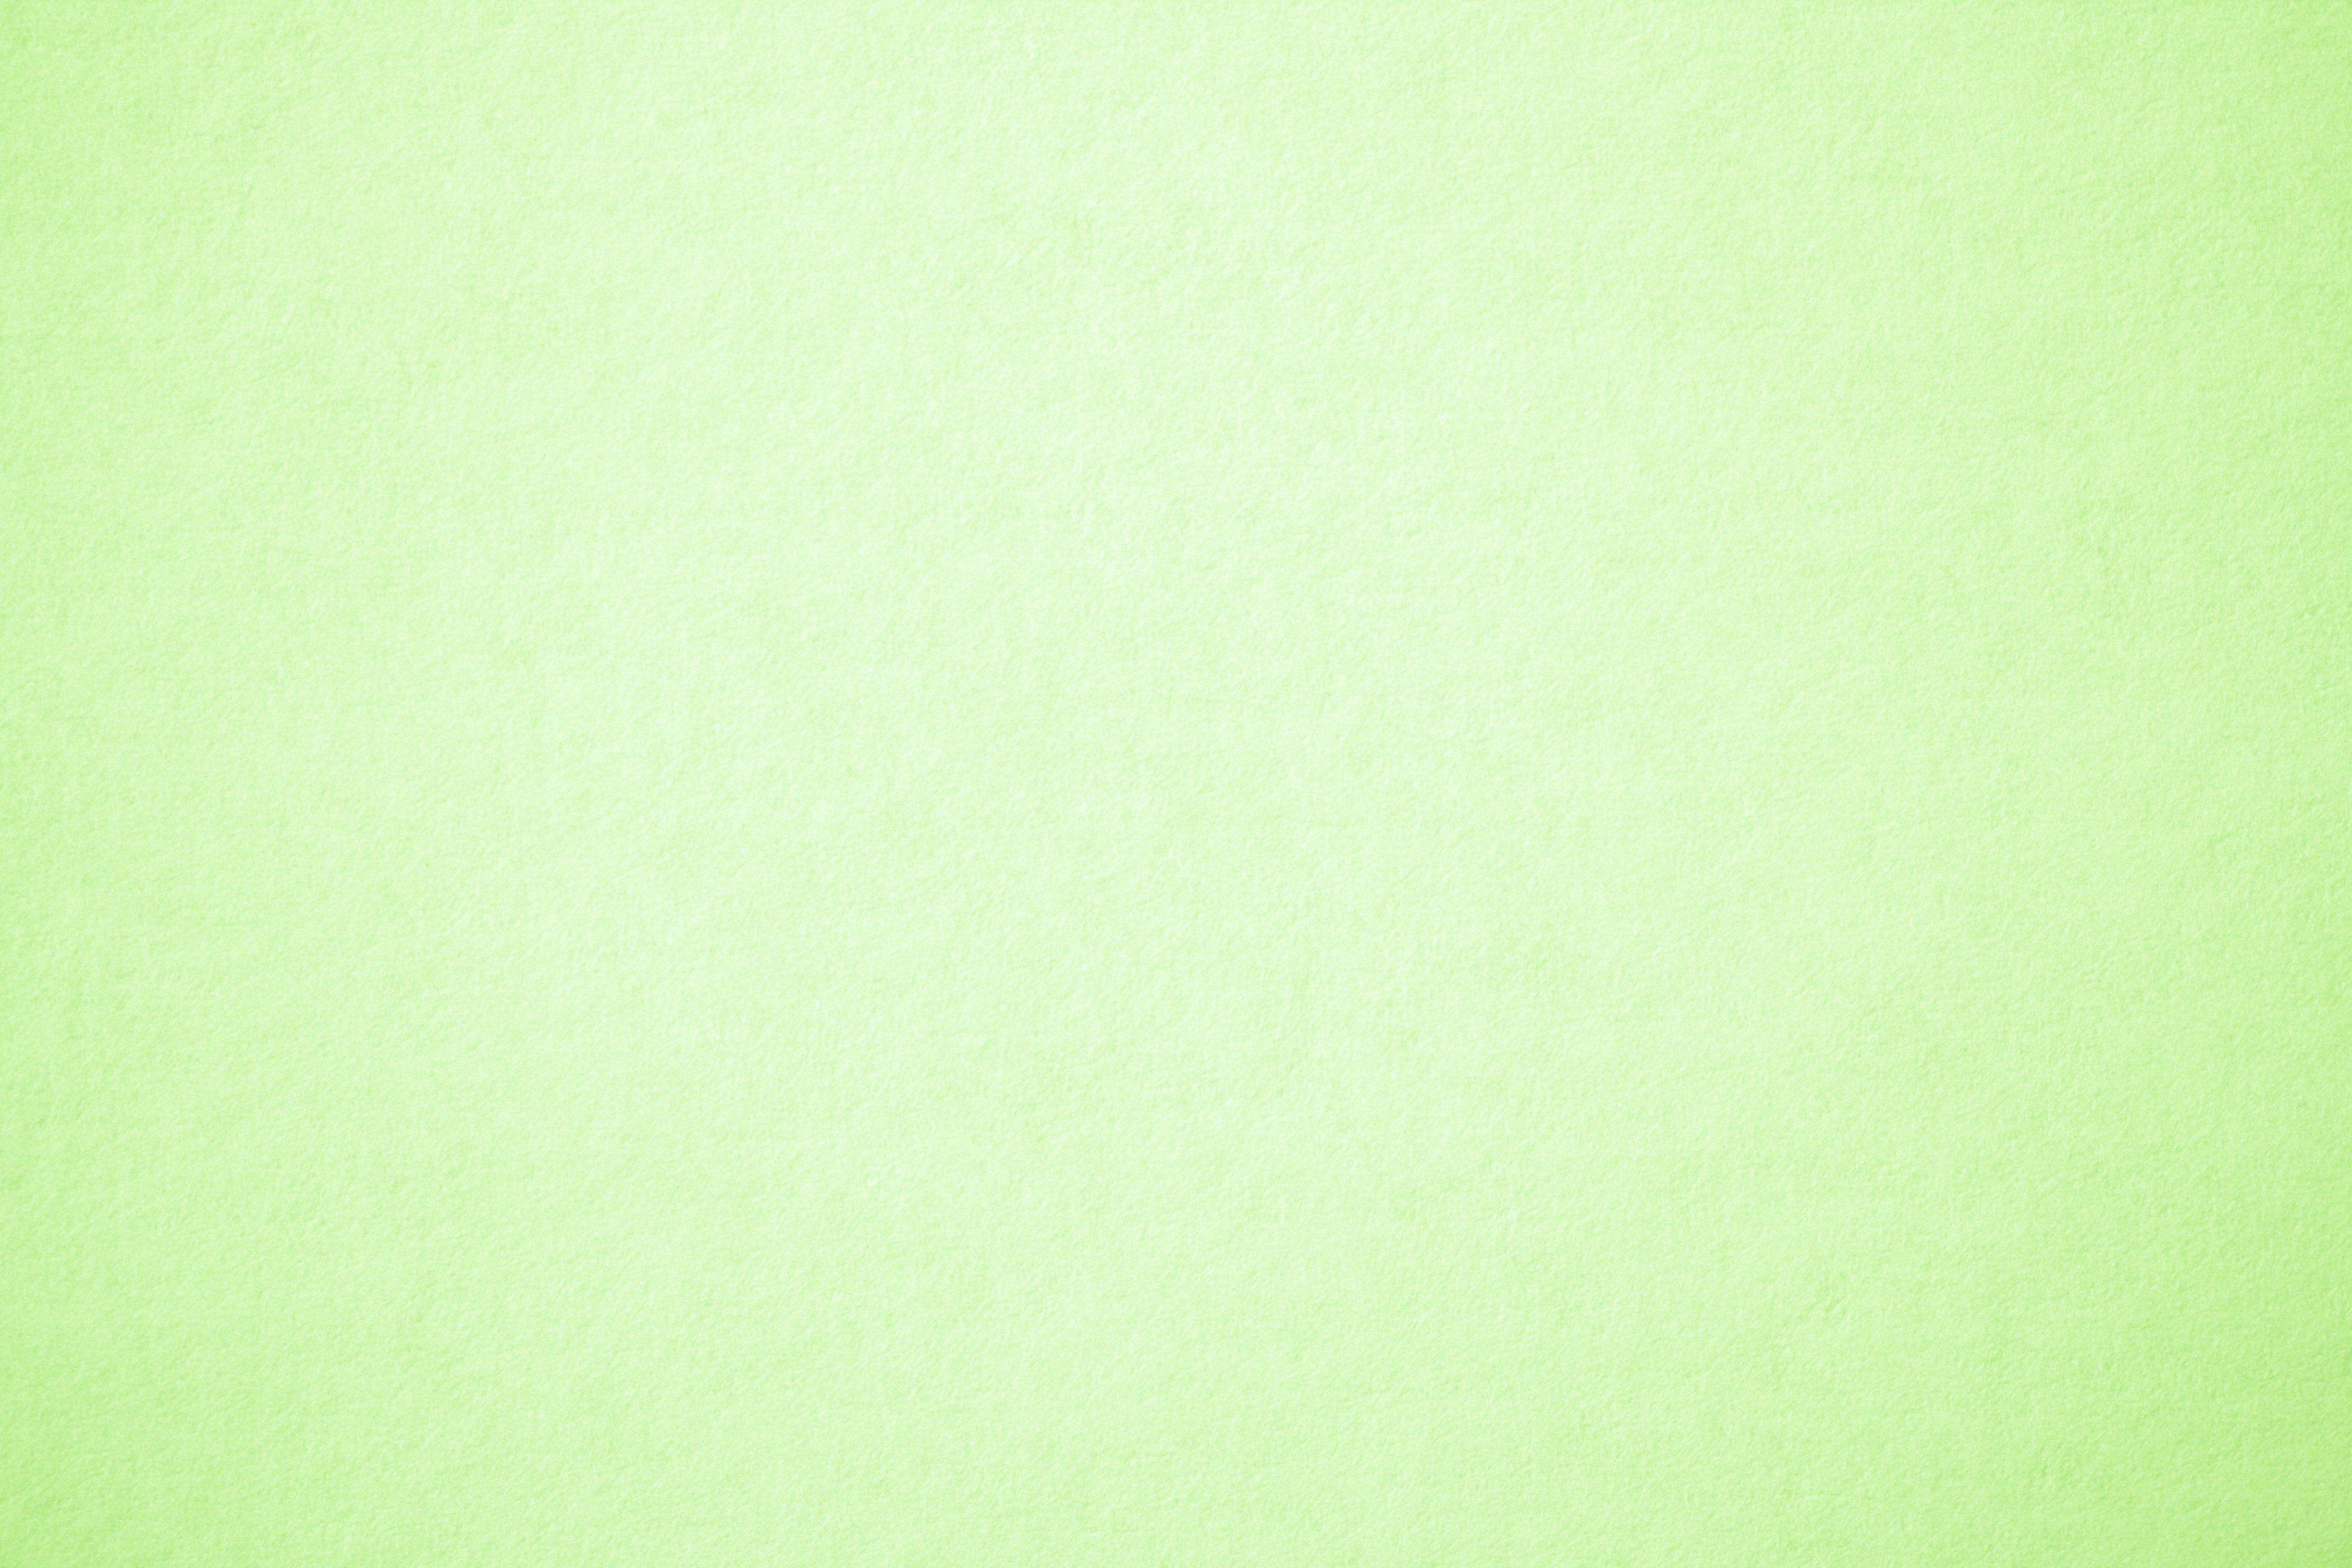 Pastel Green Paper Texture Picture Free Photograph Photos Public